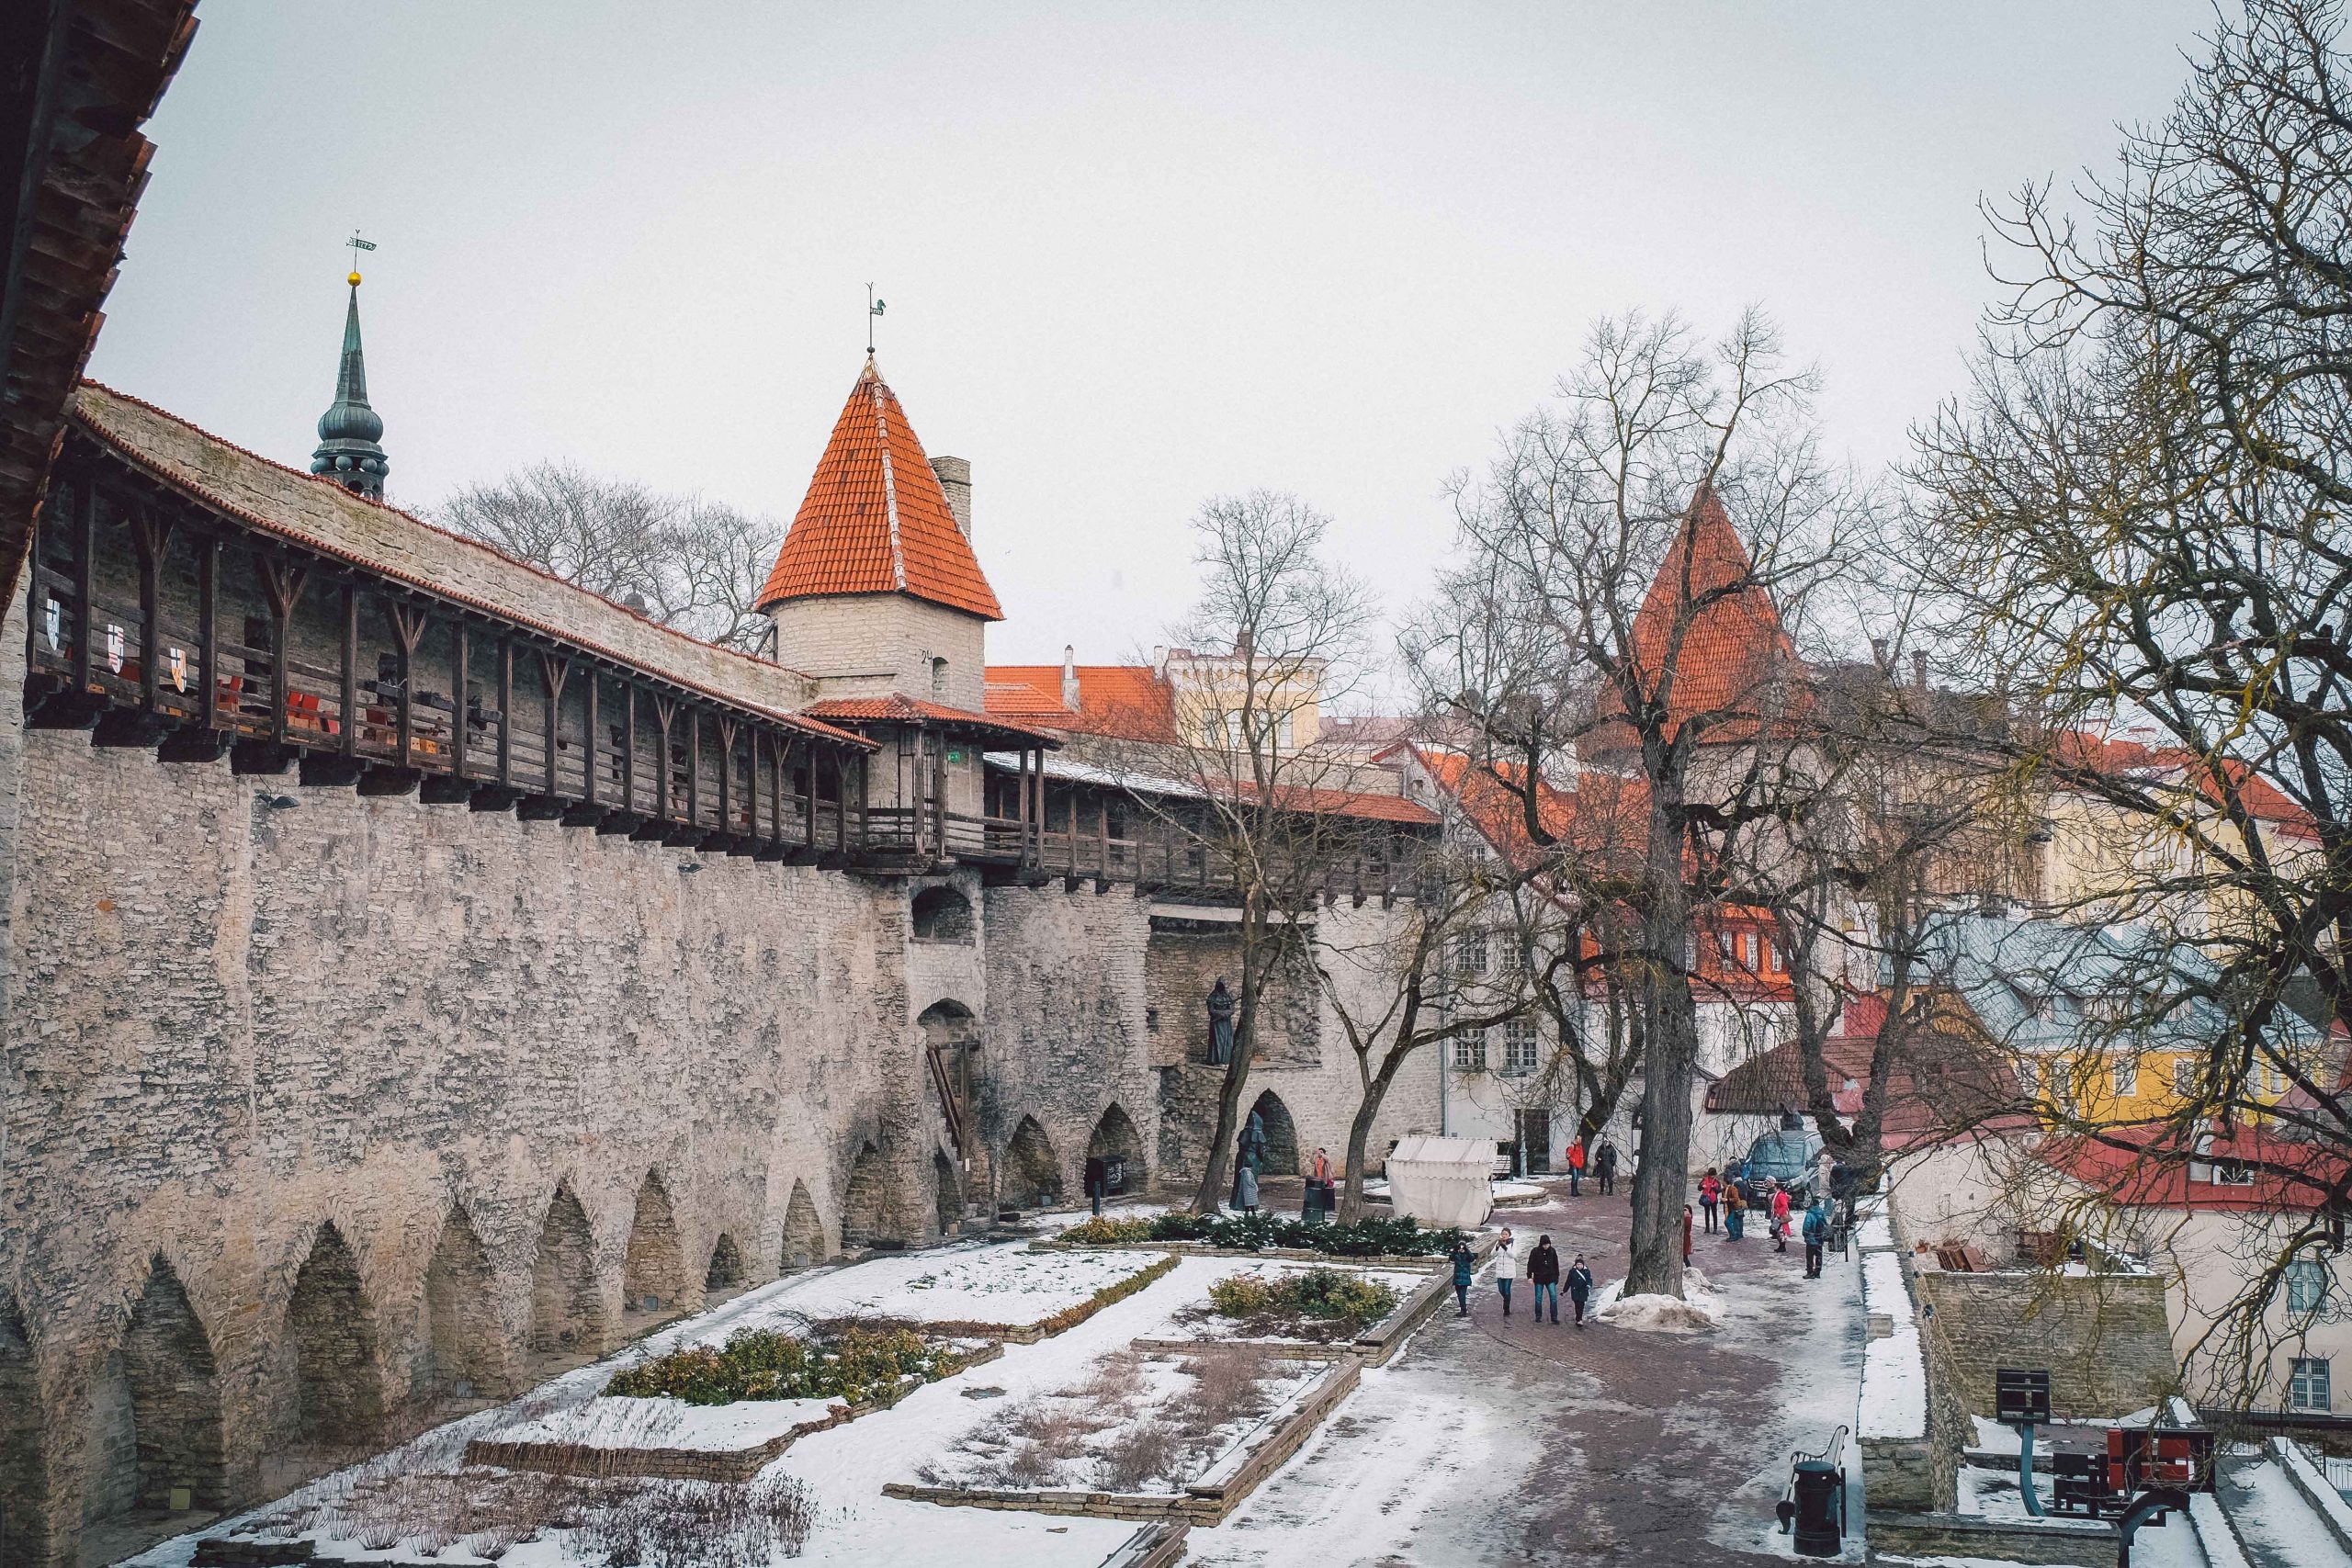 The walls of castles Tallinn Estonia